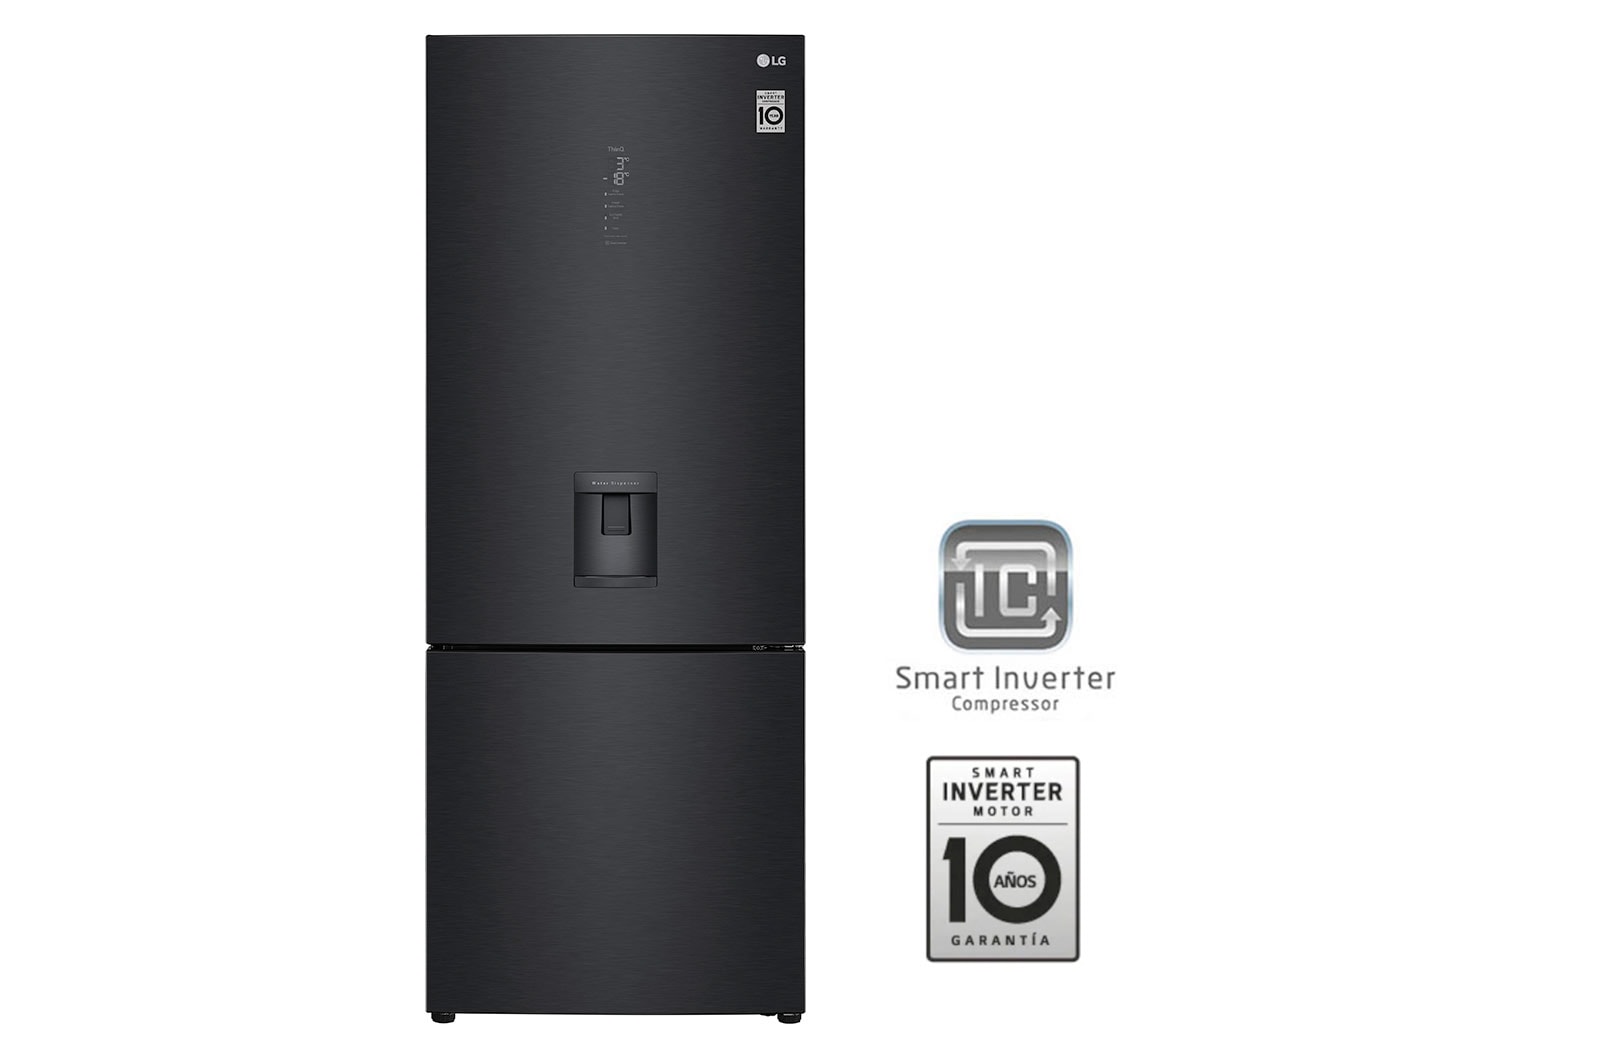 LG Nevera LG Bottom Freezer, 461lts, Tecnología NatureFRESH, Acabado Matte Black Steel, GB45SPT